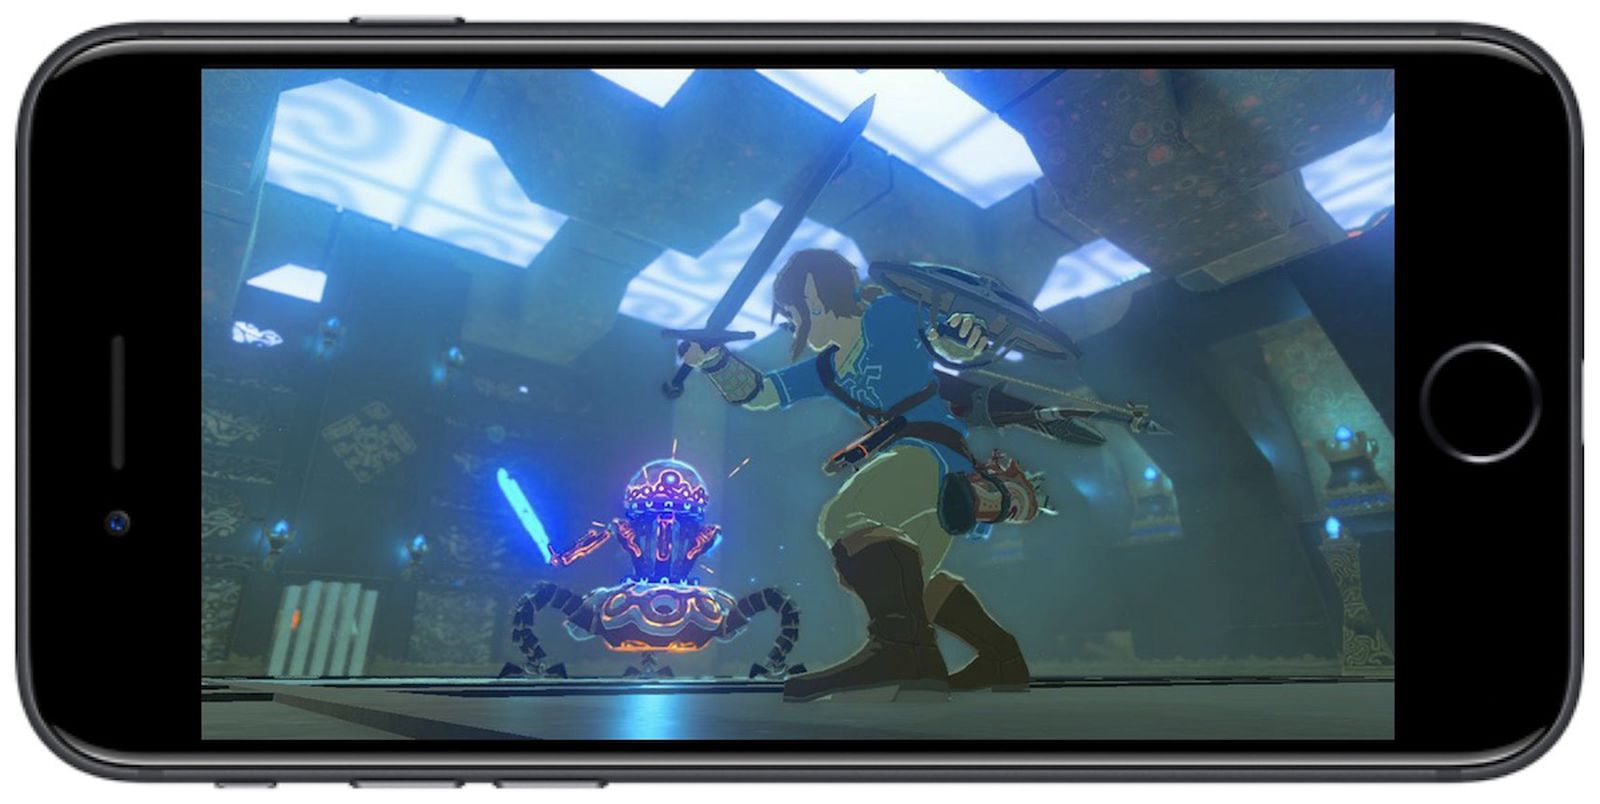 Zelda do Iphone chega ao Android